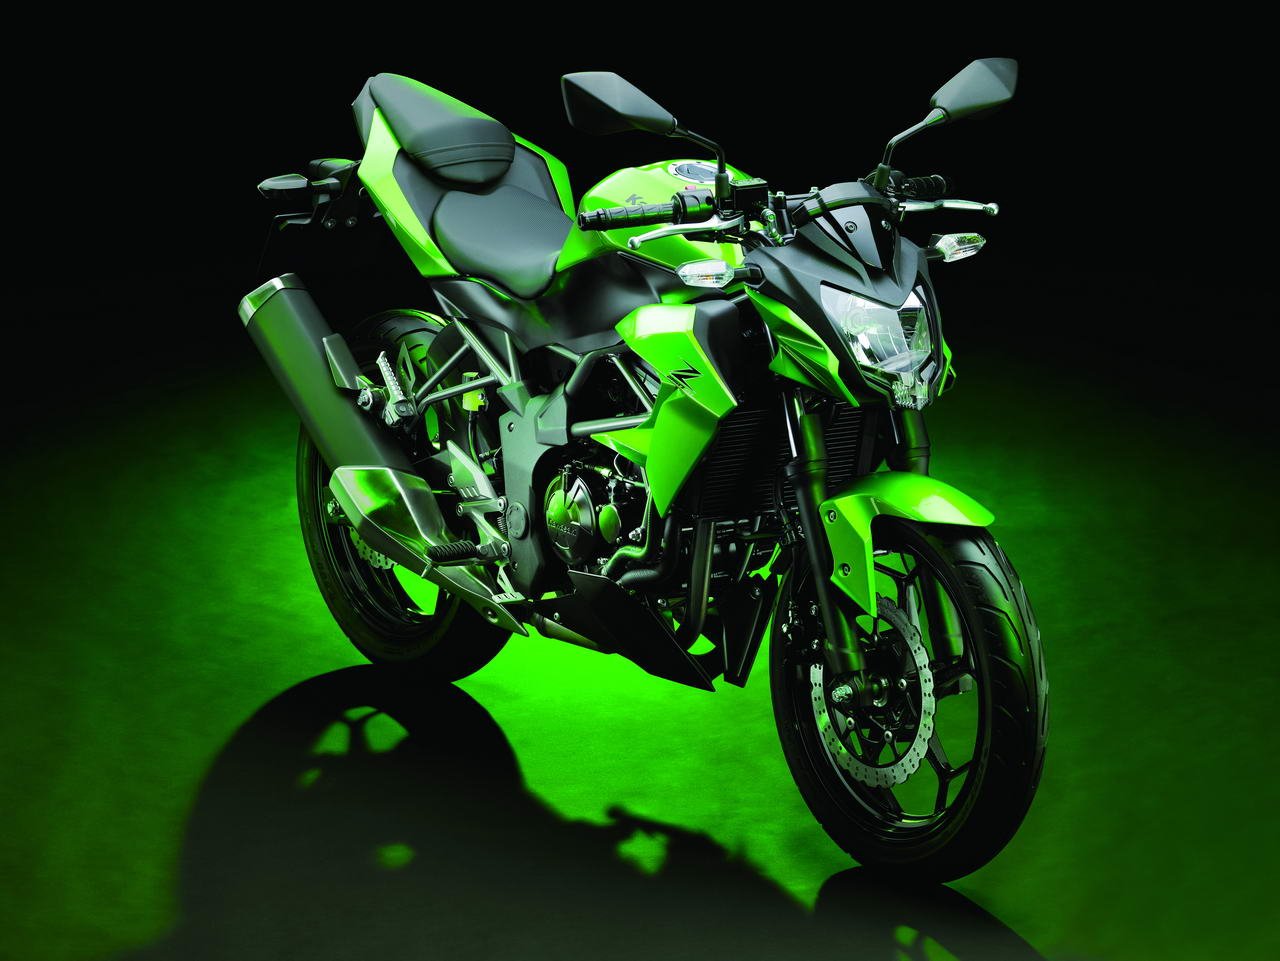 Listino Kawasaki KX 250 F Cross - image 13631_1 on https://moto.motori.net